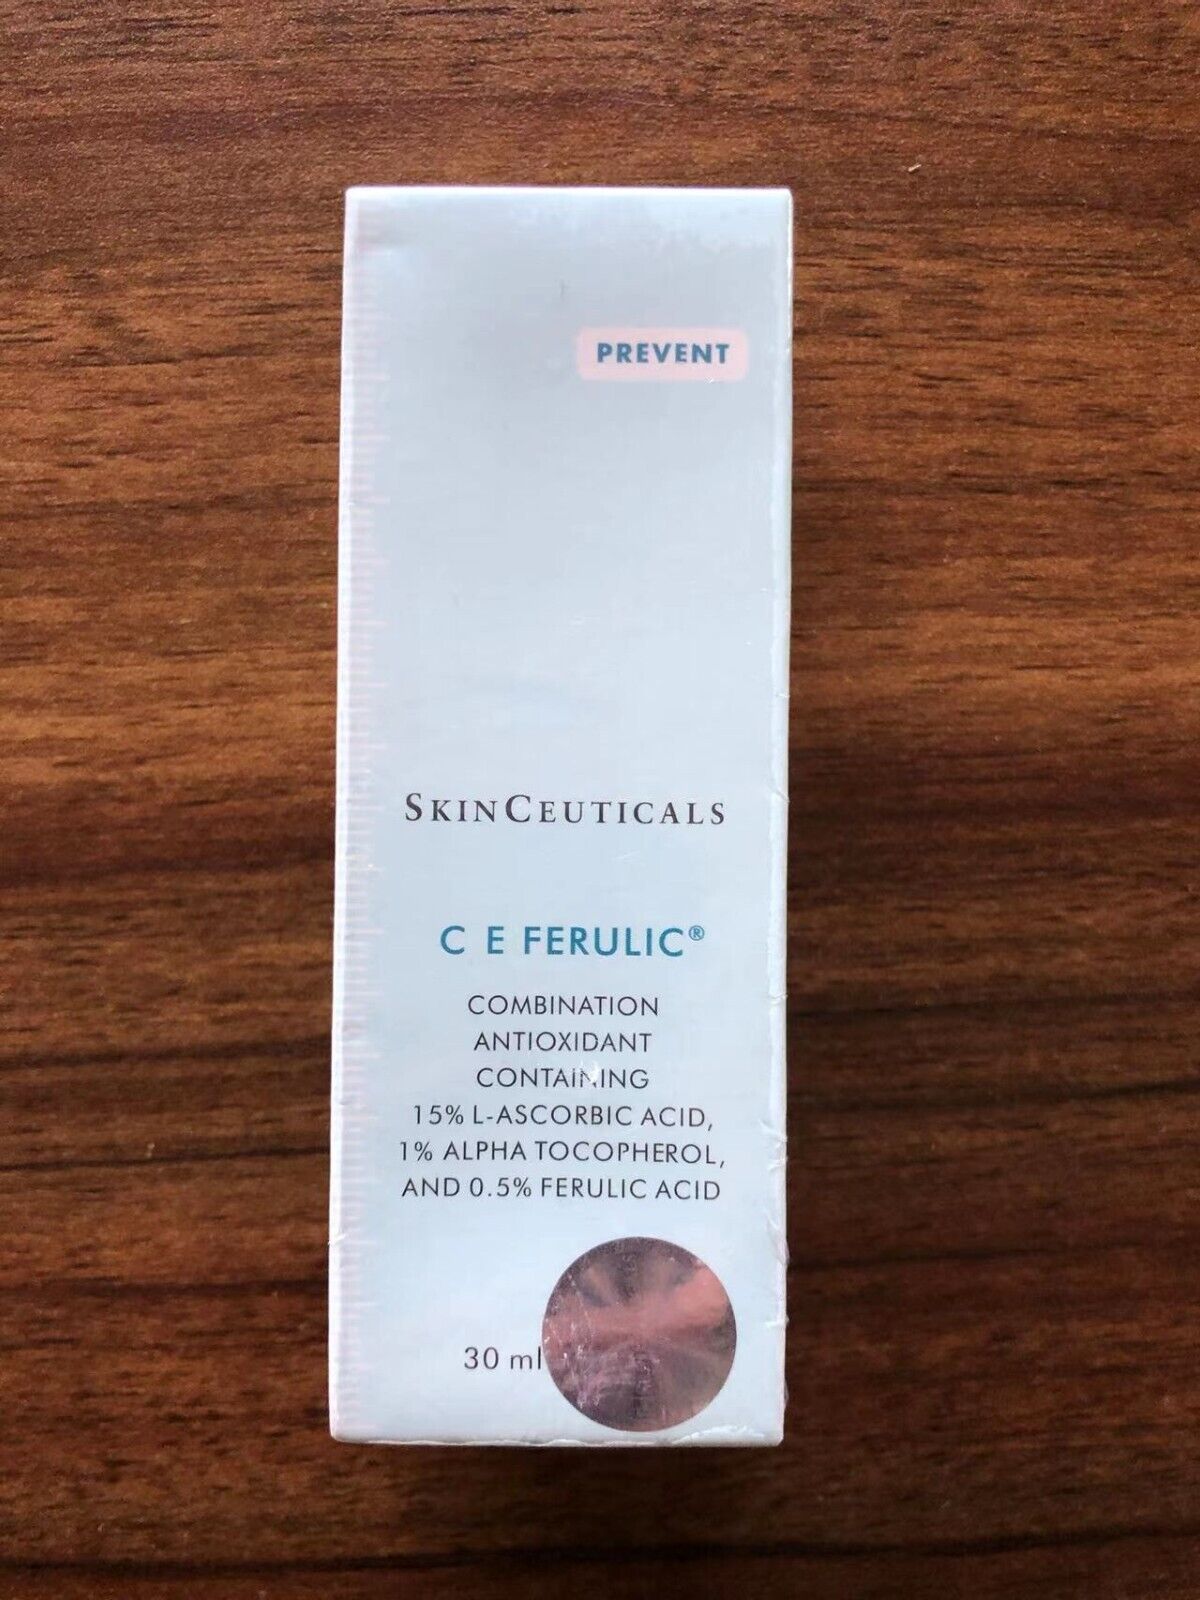 Skin+ceuticals C E Ferulic 30ml/1 fl oz